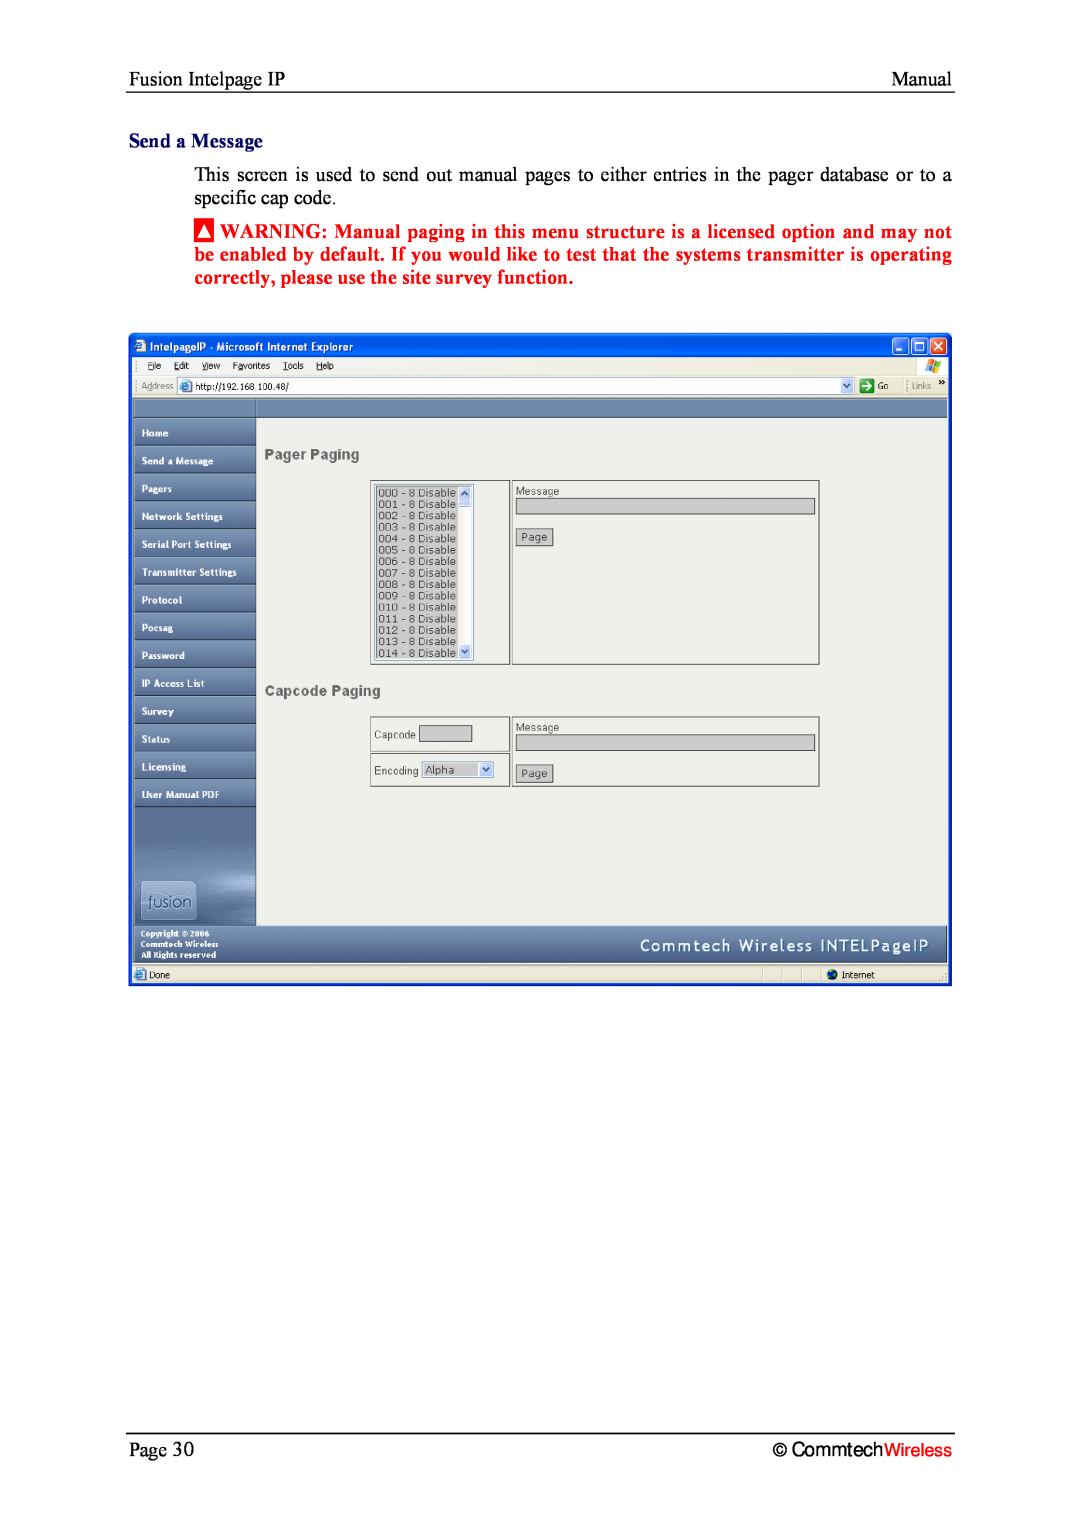 Fusion 2.1, INTELPage IP 5 manual Send a Message, Fusion Intelpage IP, Manual, CommtechWireless 